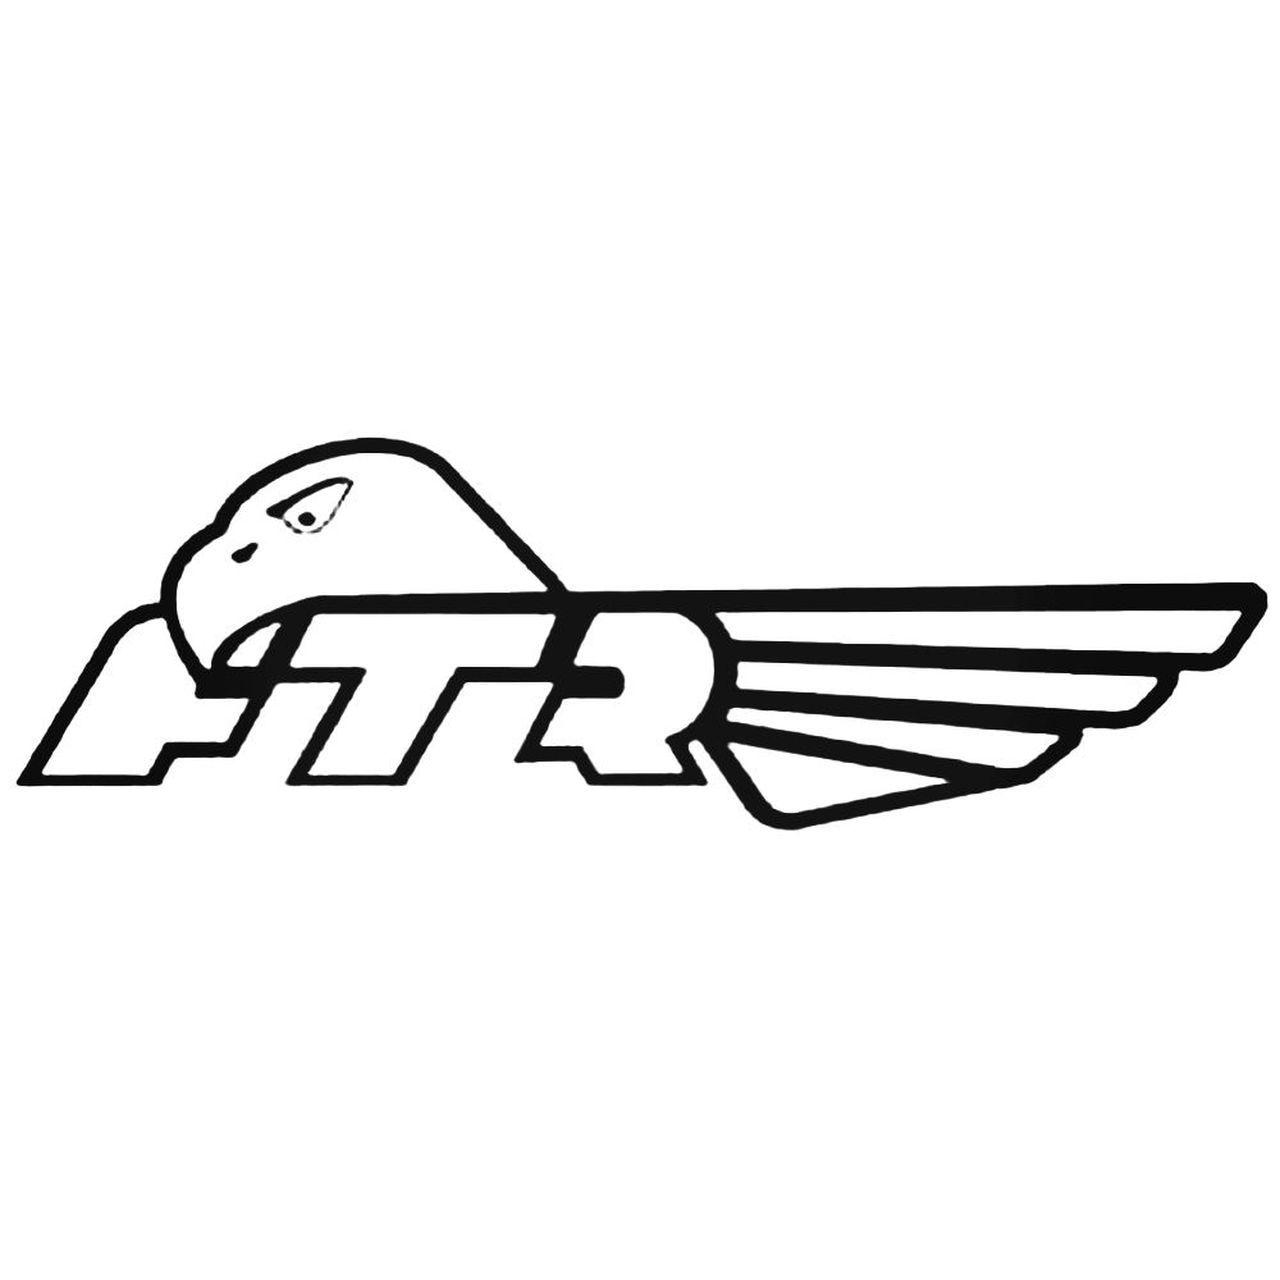 Tickford Logo - Ford Tickford Racing Decal Sticker